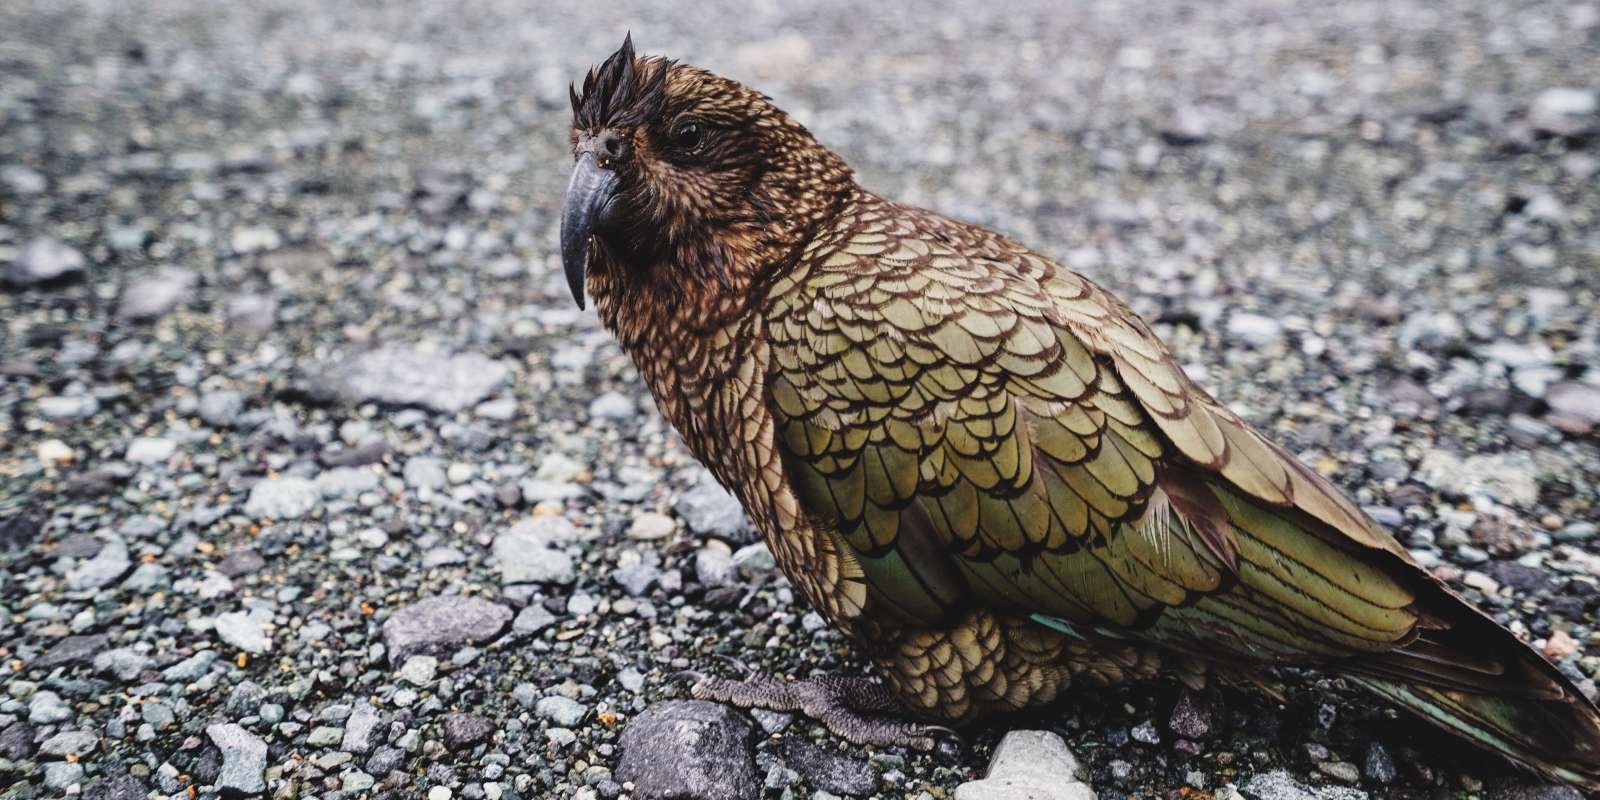 Kea, Native bird of New Zealand